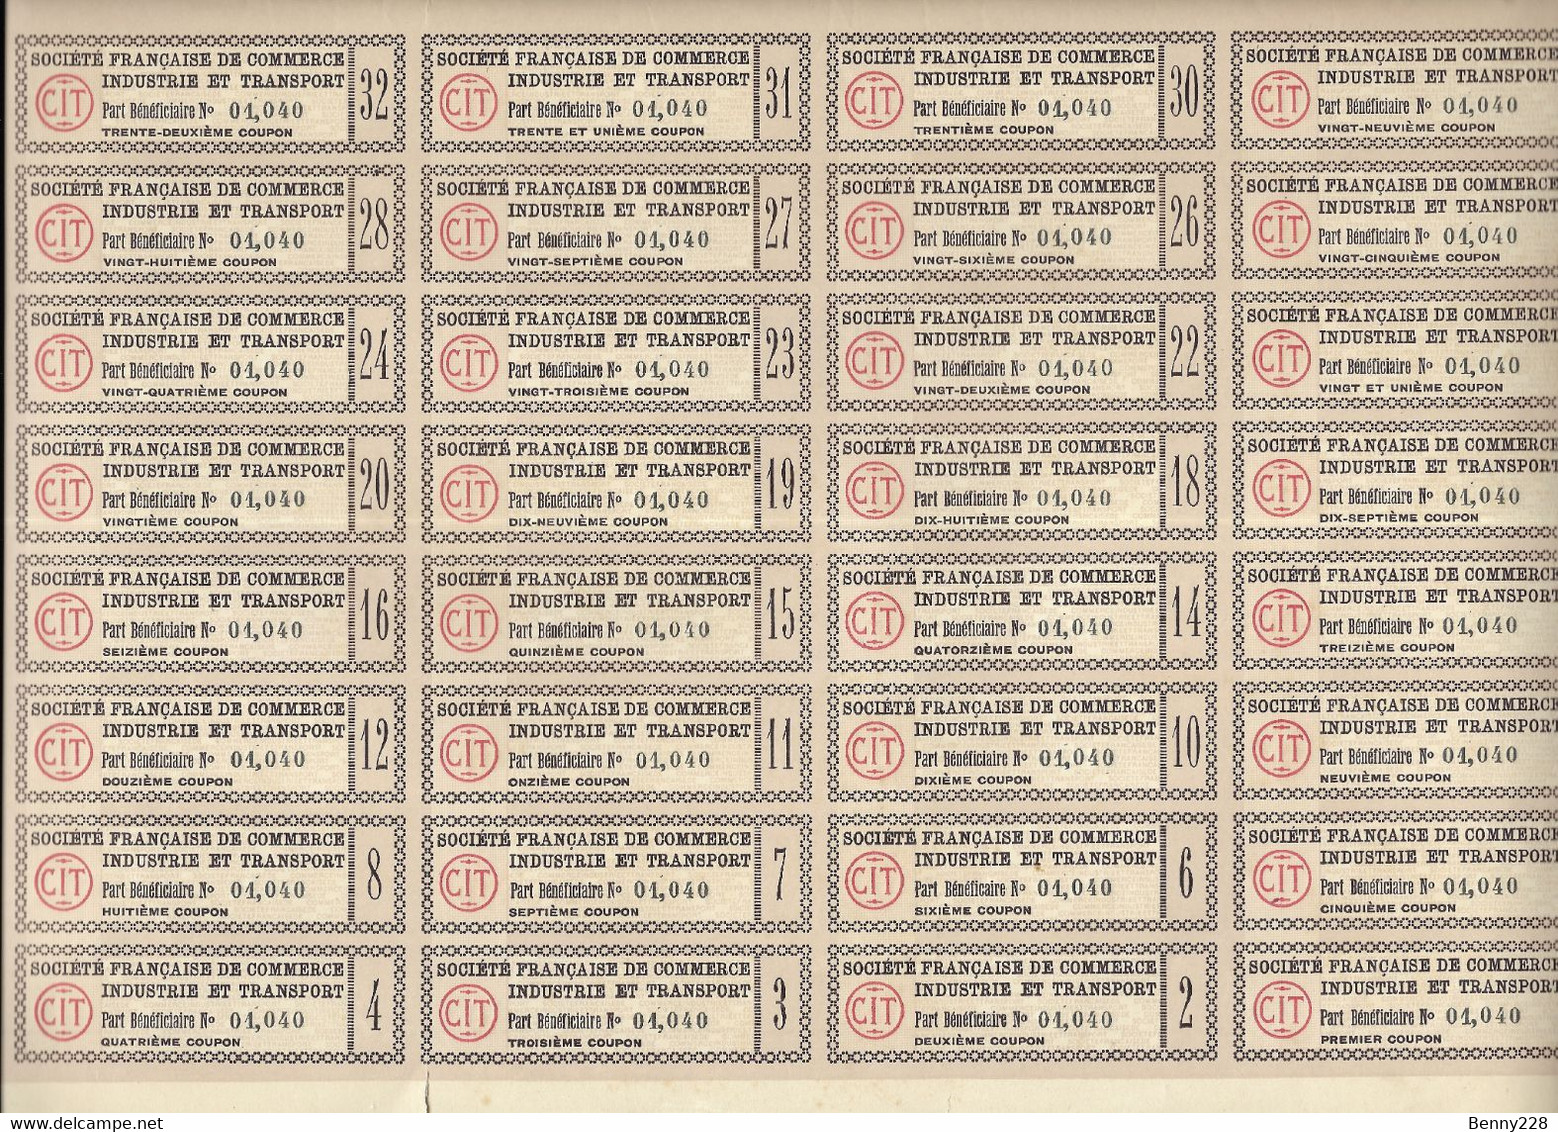 SOCIETE FRANCAISE DE COMMERCE INDUSTRIE & TRANSPORT - 1928 - Transports